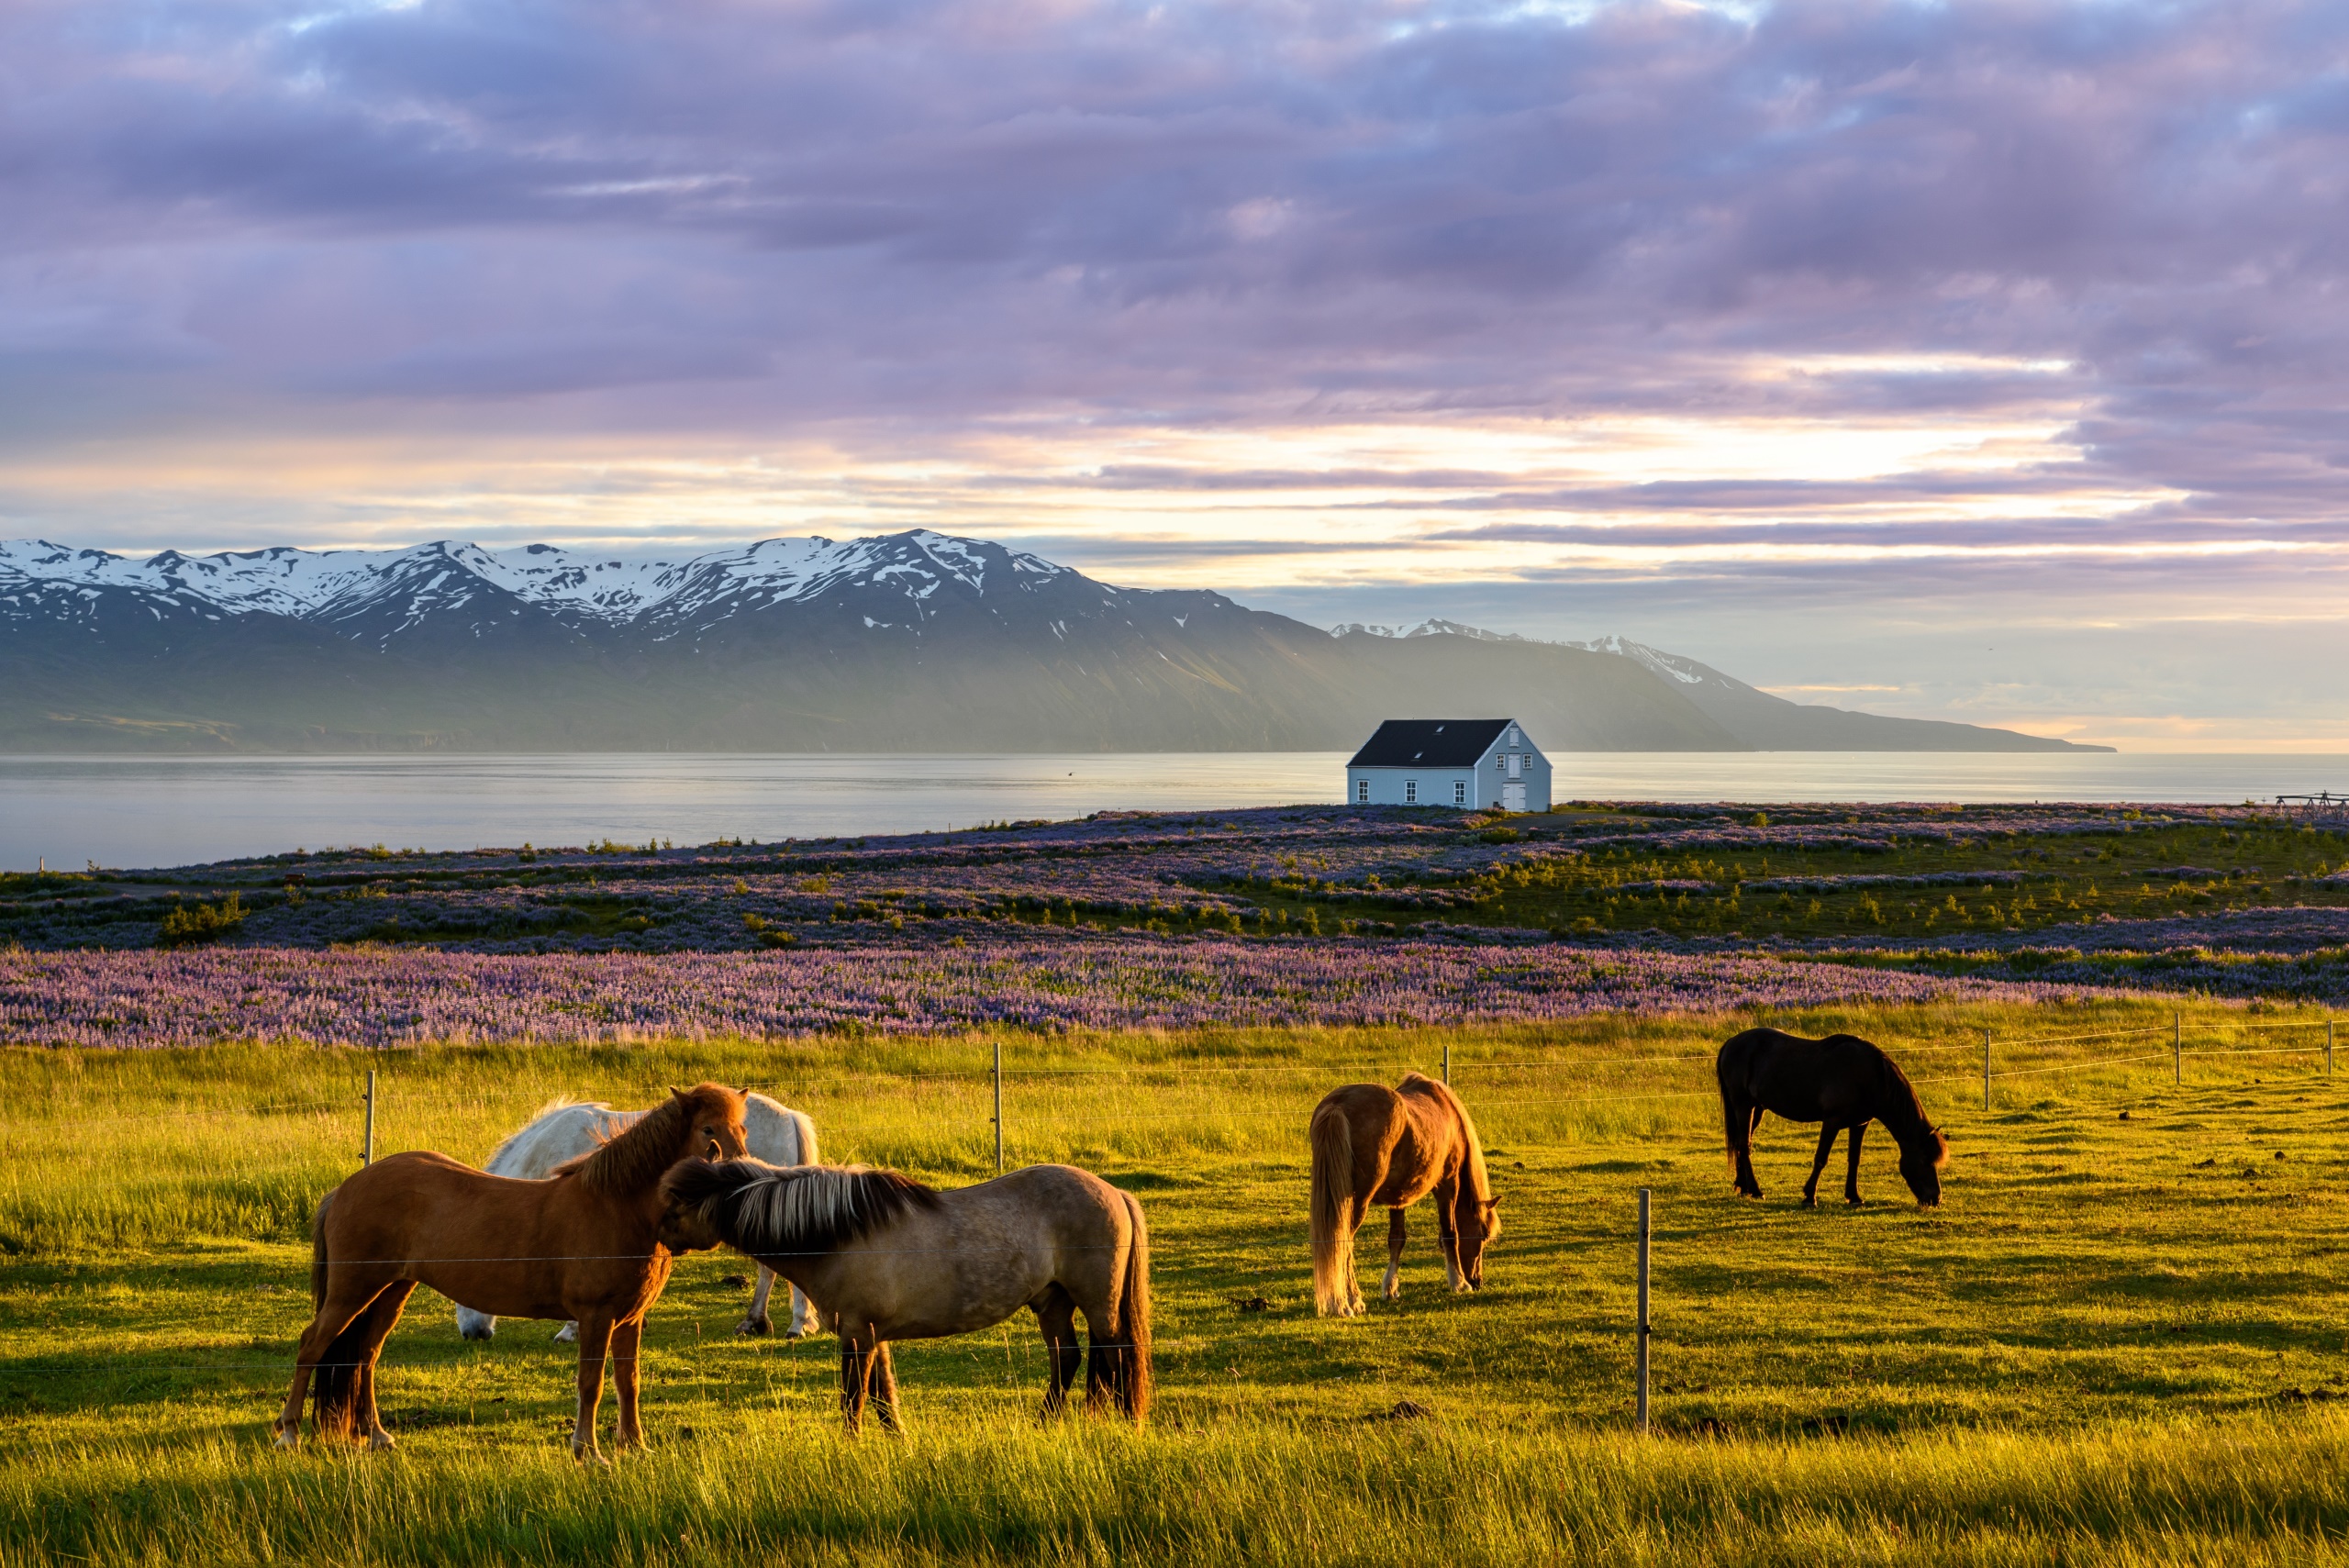 General 2560x1709 Iceland nature horse sky landscape animals